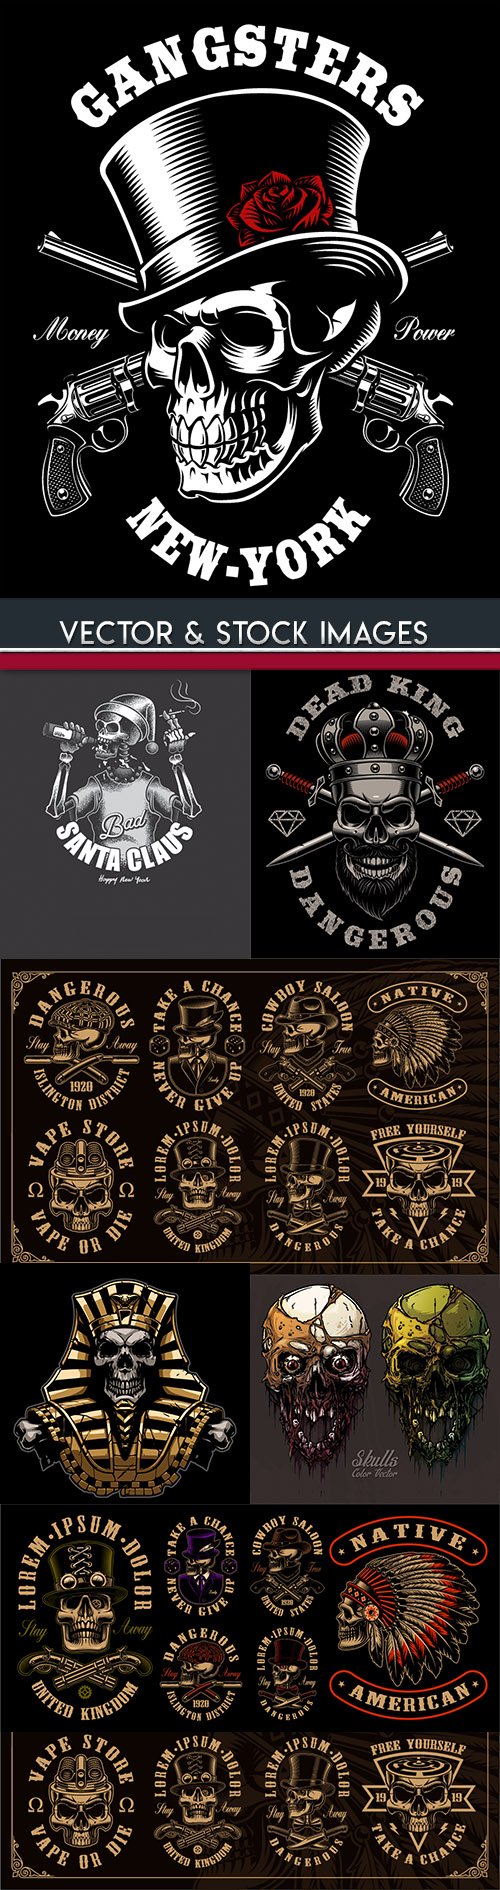 Skull and accessories grunge label drawn design 7